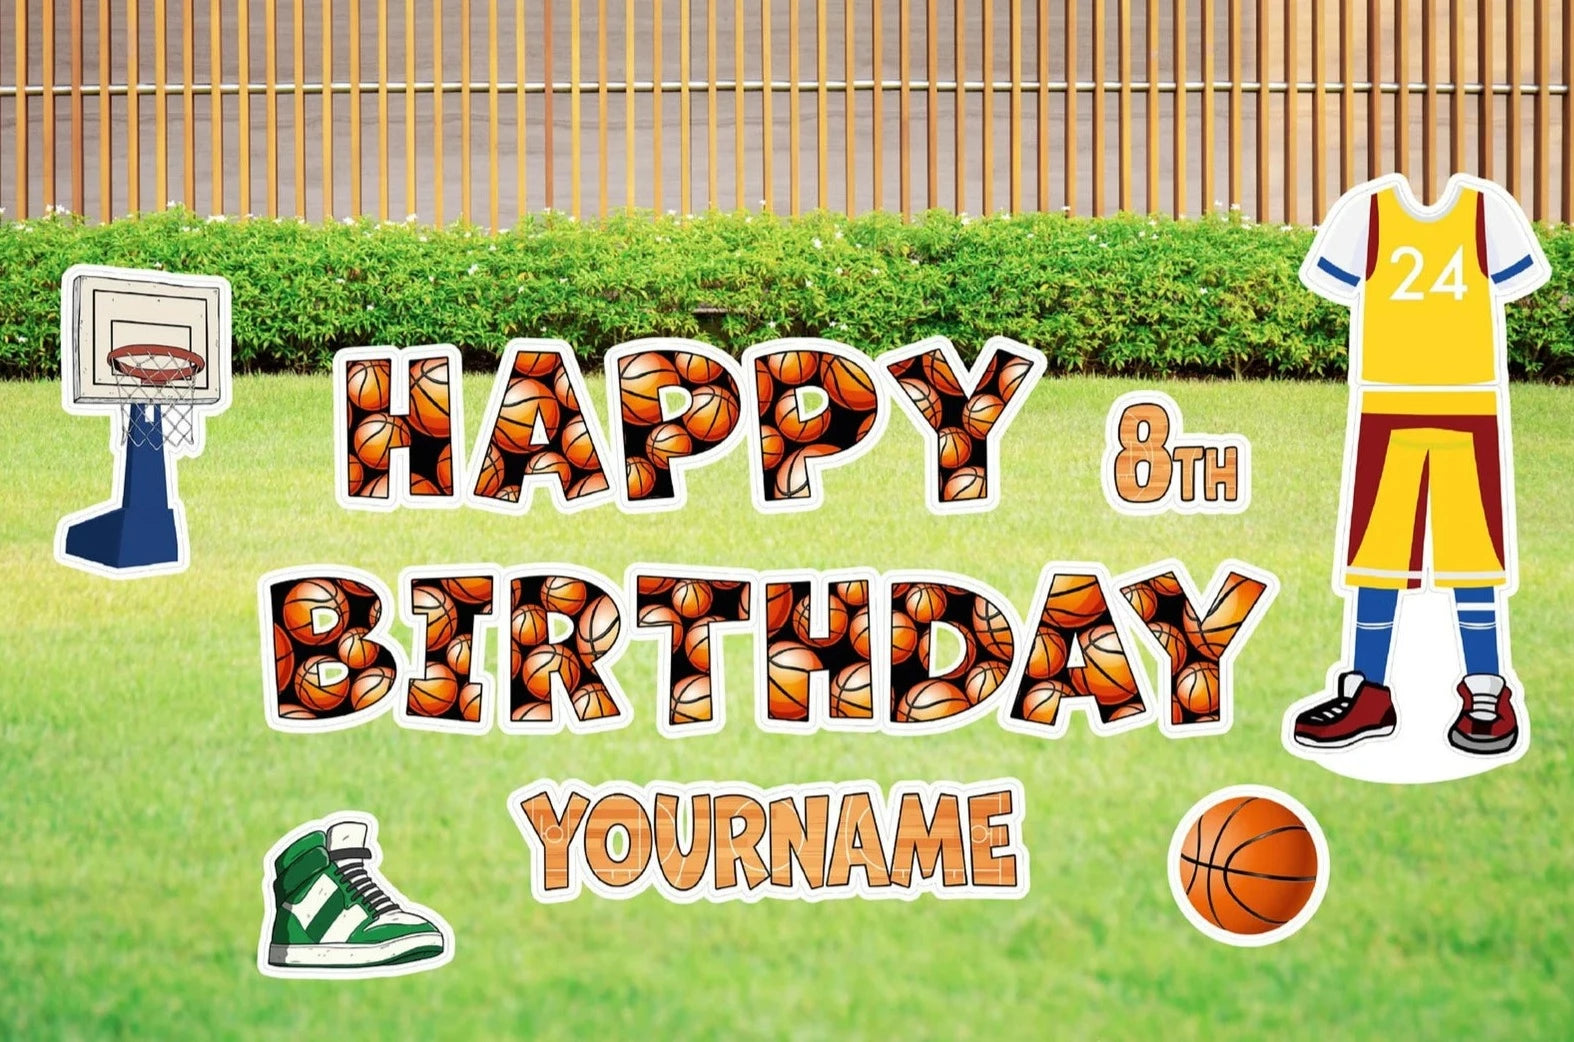 Basketball Happy Birthday Yard Decoration